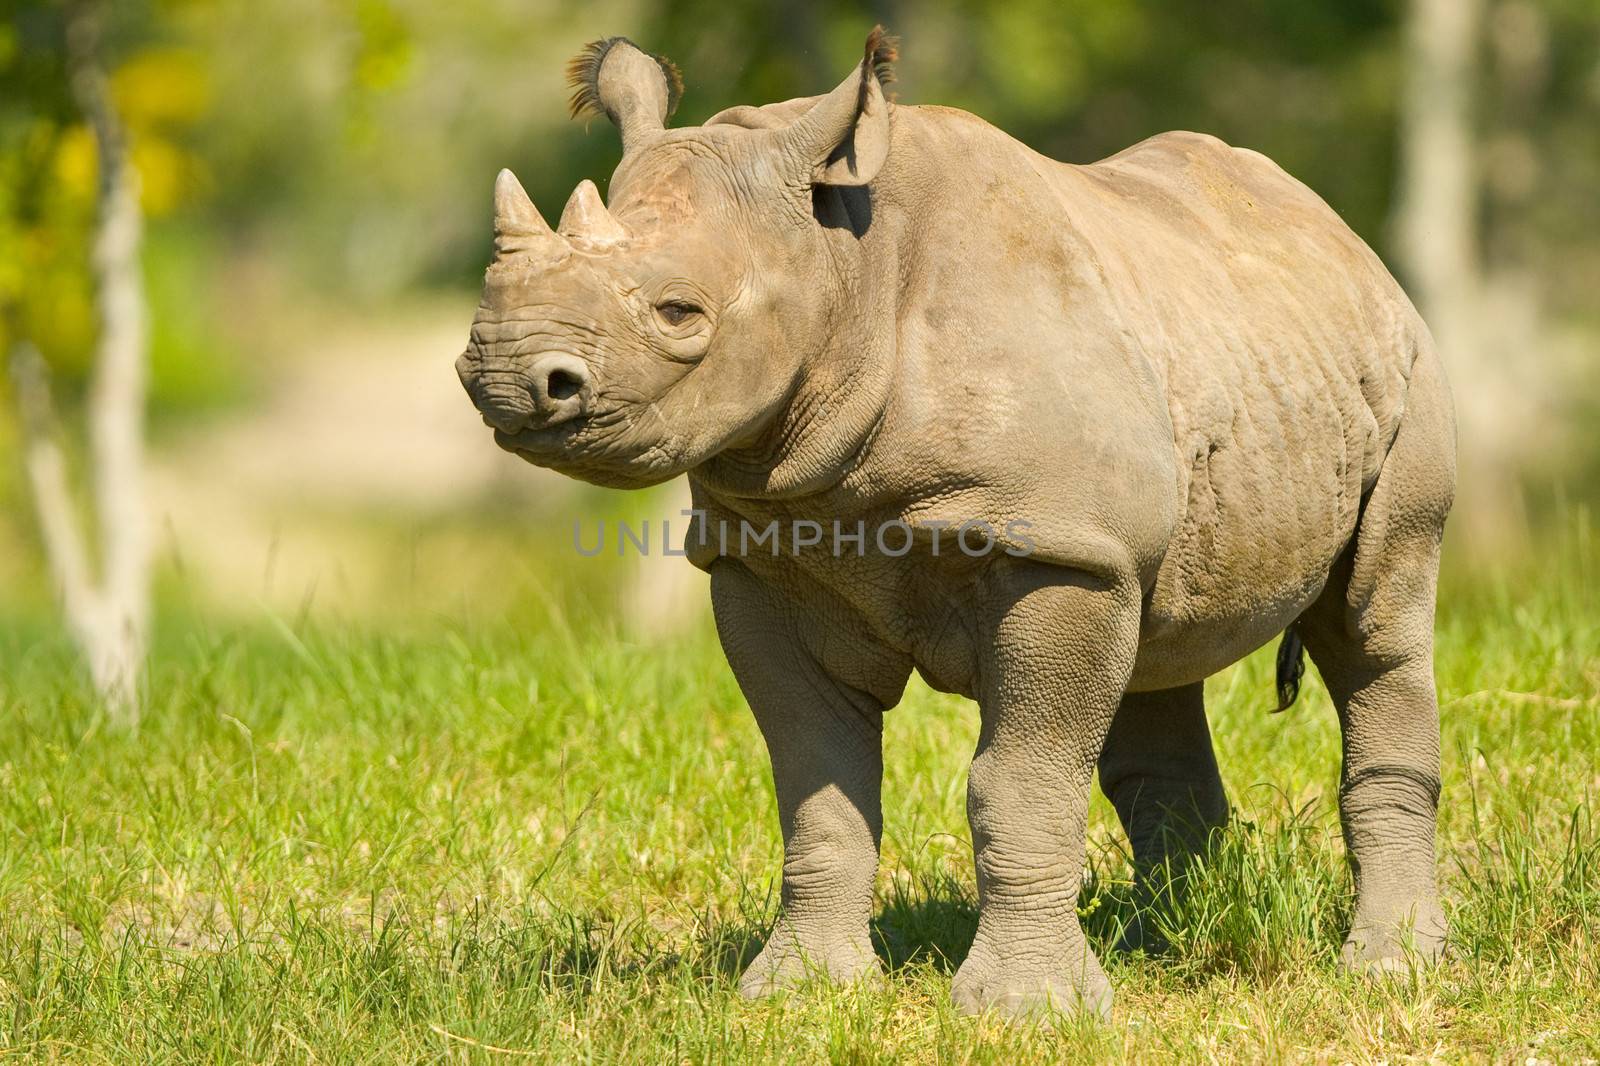 A young Rhinoceros on a grassy field.